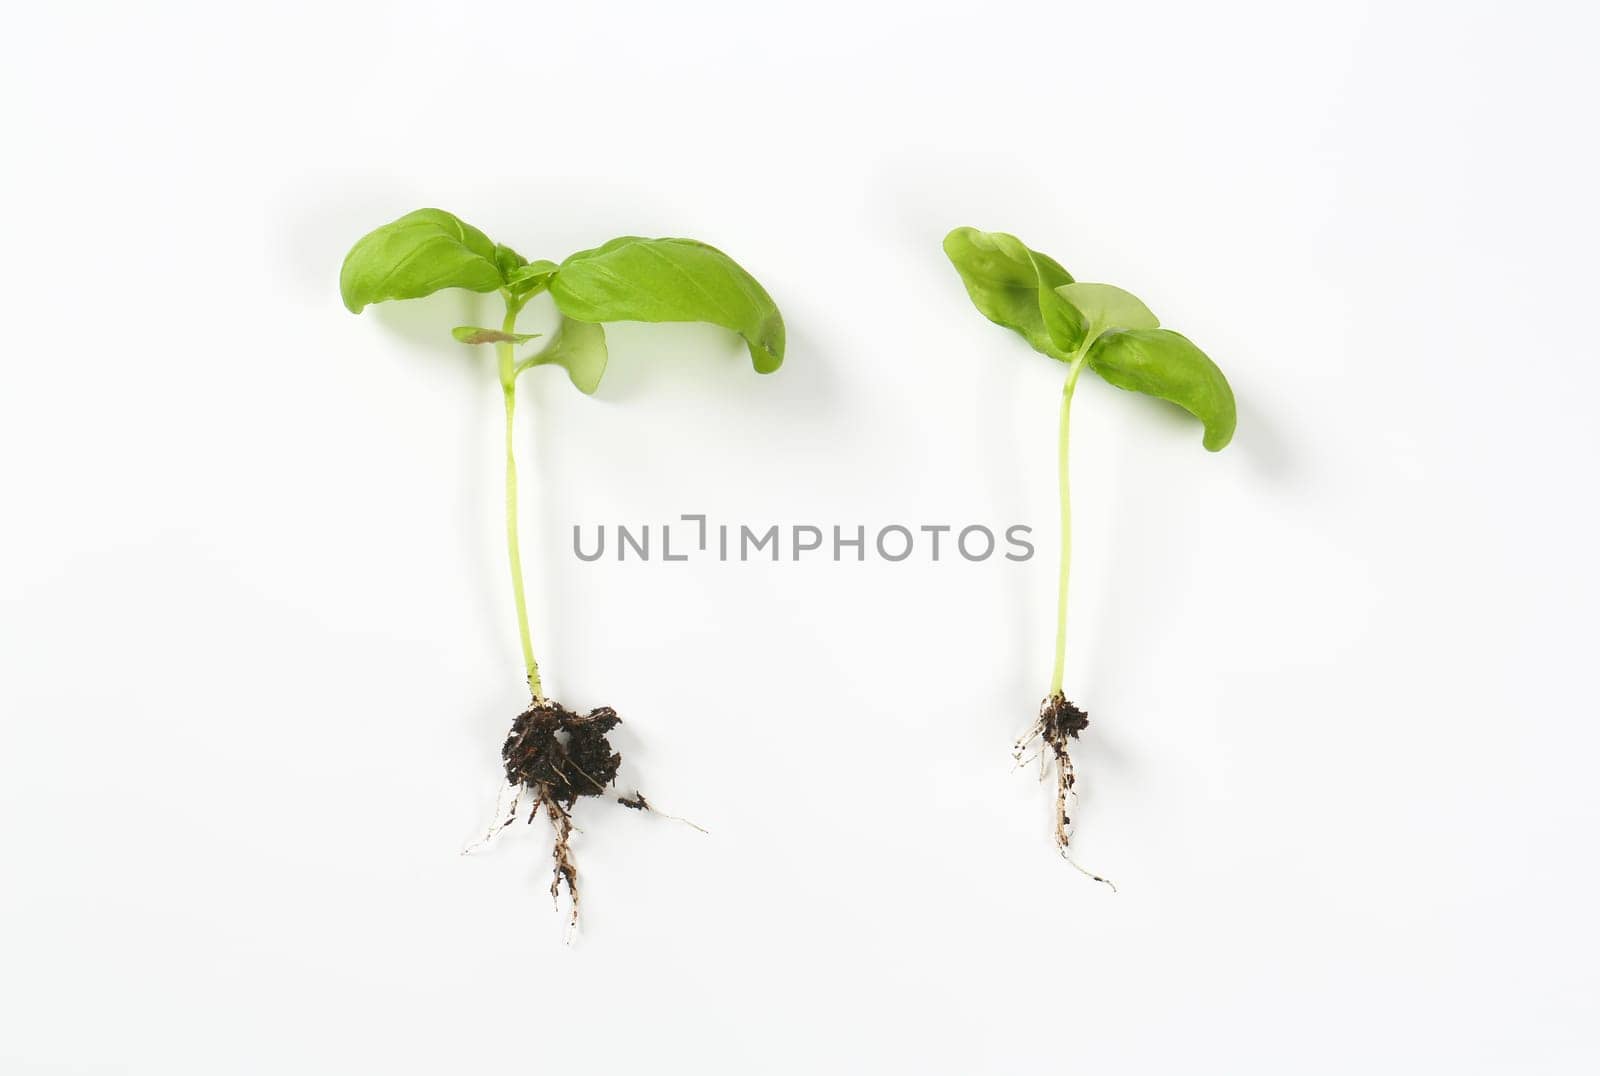 Two basil seedlings by Digifoodstock